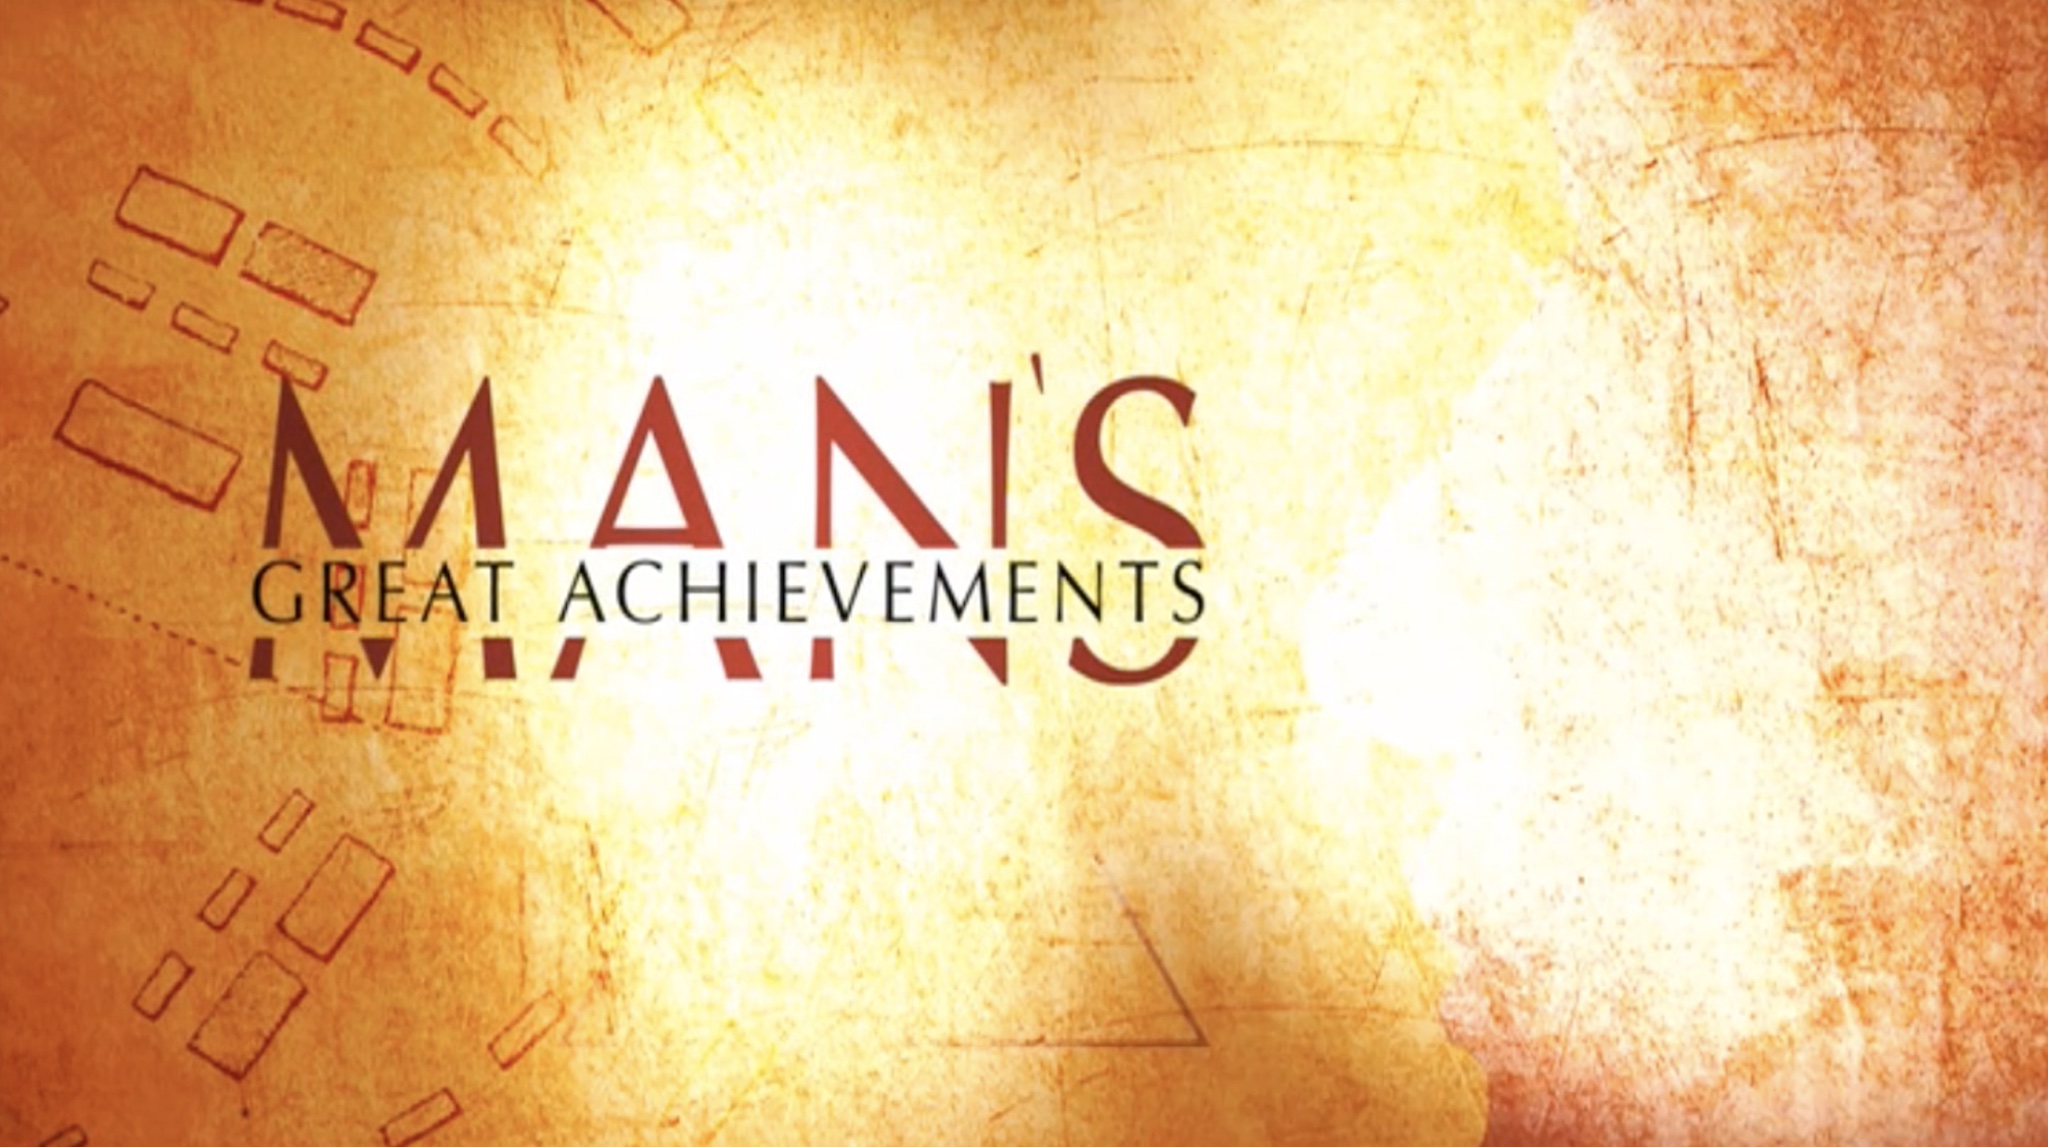 Man’s Greatest Achievements